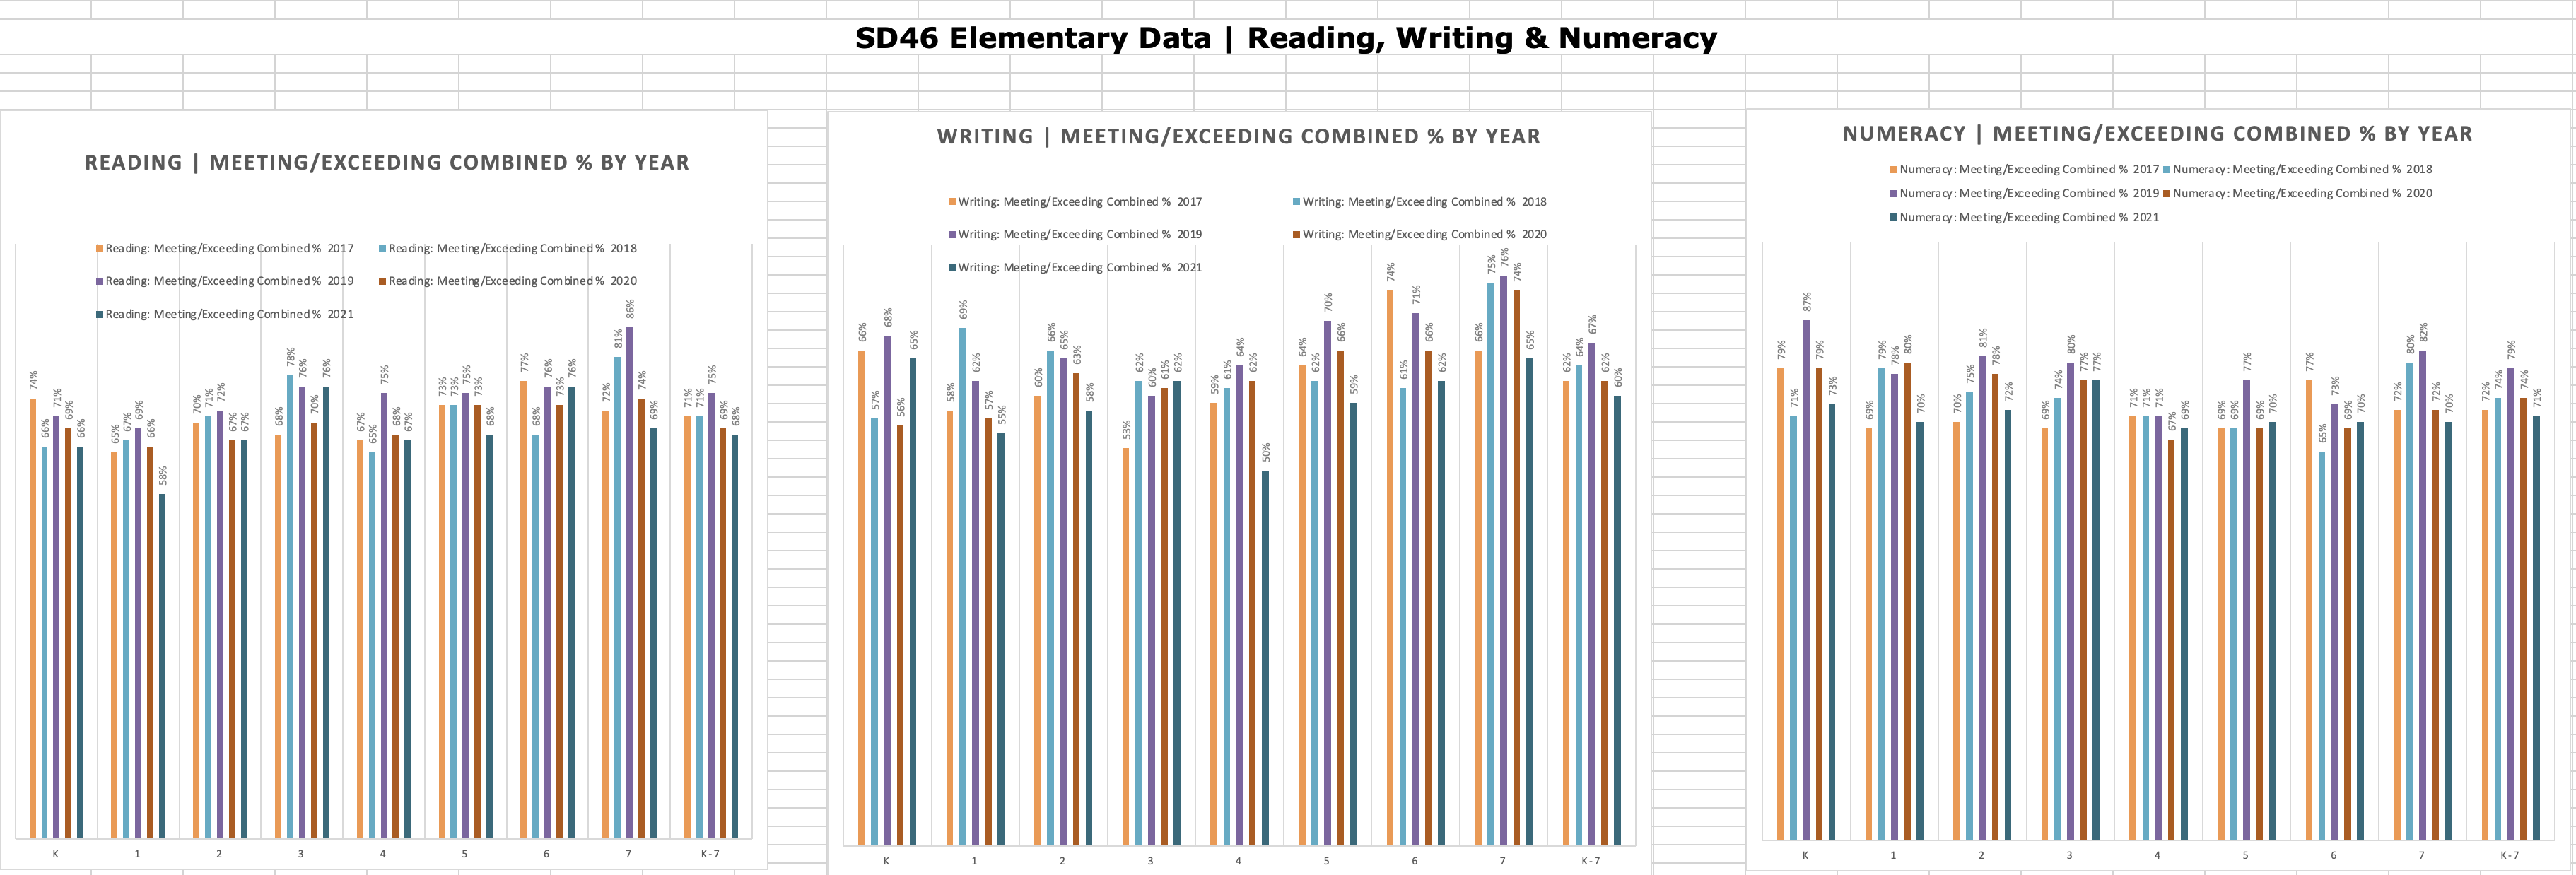 SD46-Elementary-Data-